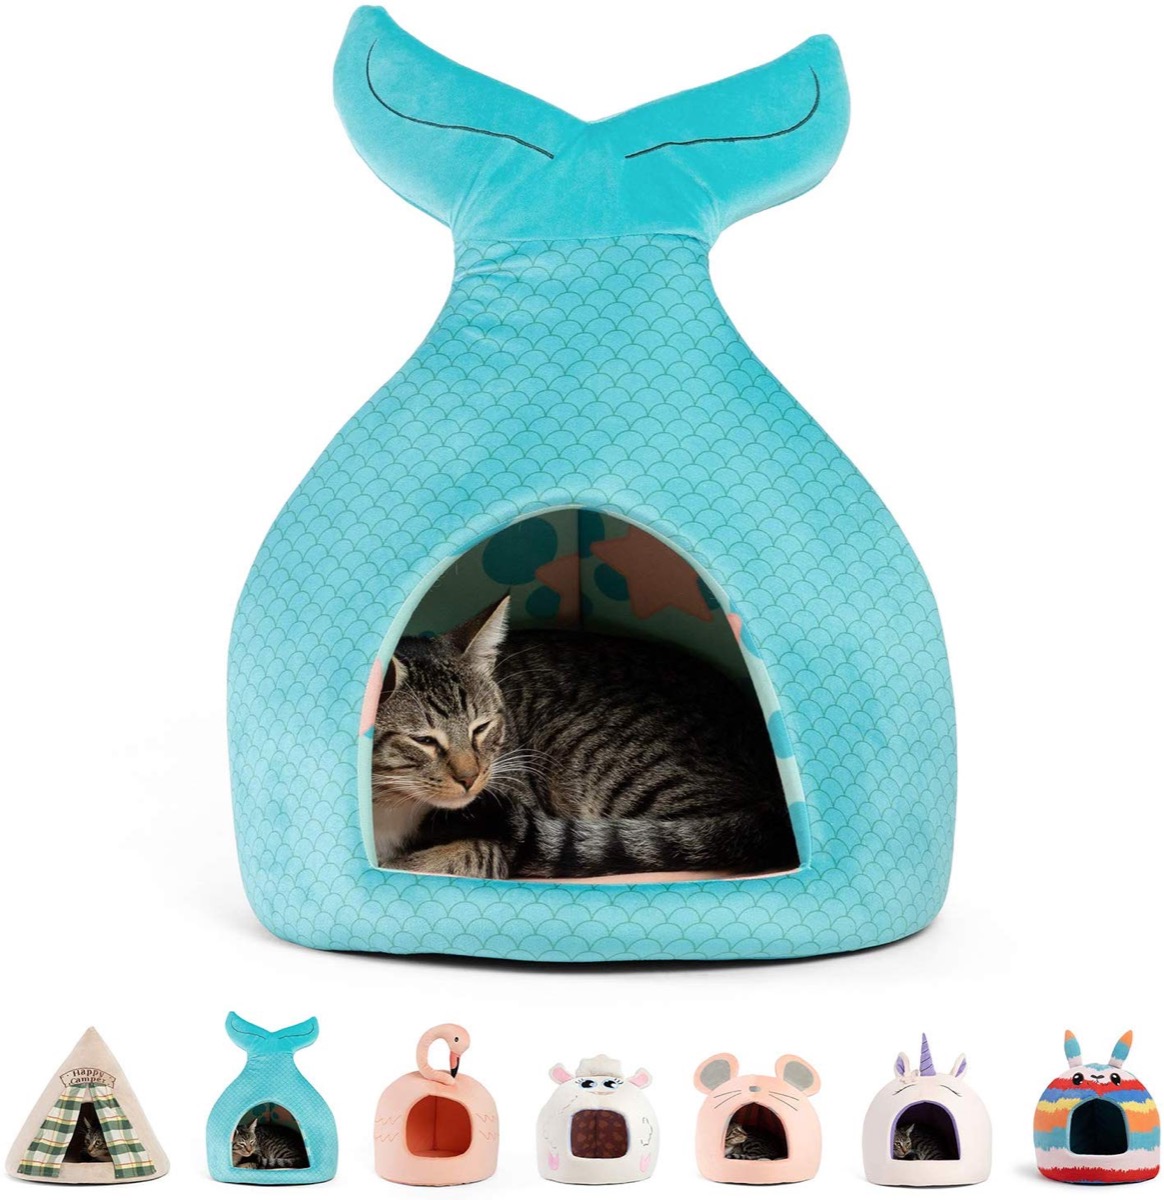 Mermaid tail novelty cat hut Amazon pet gifts